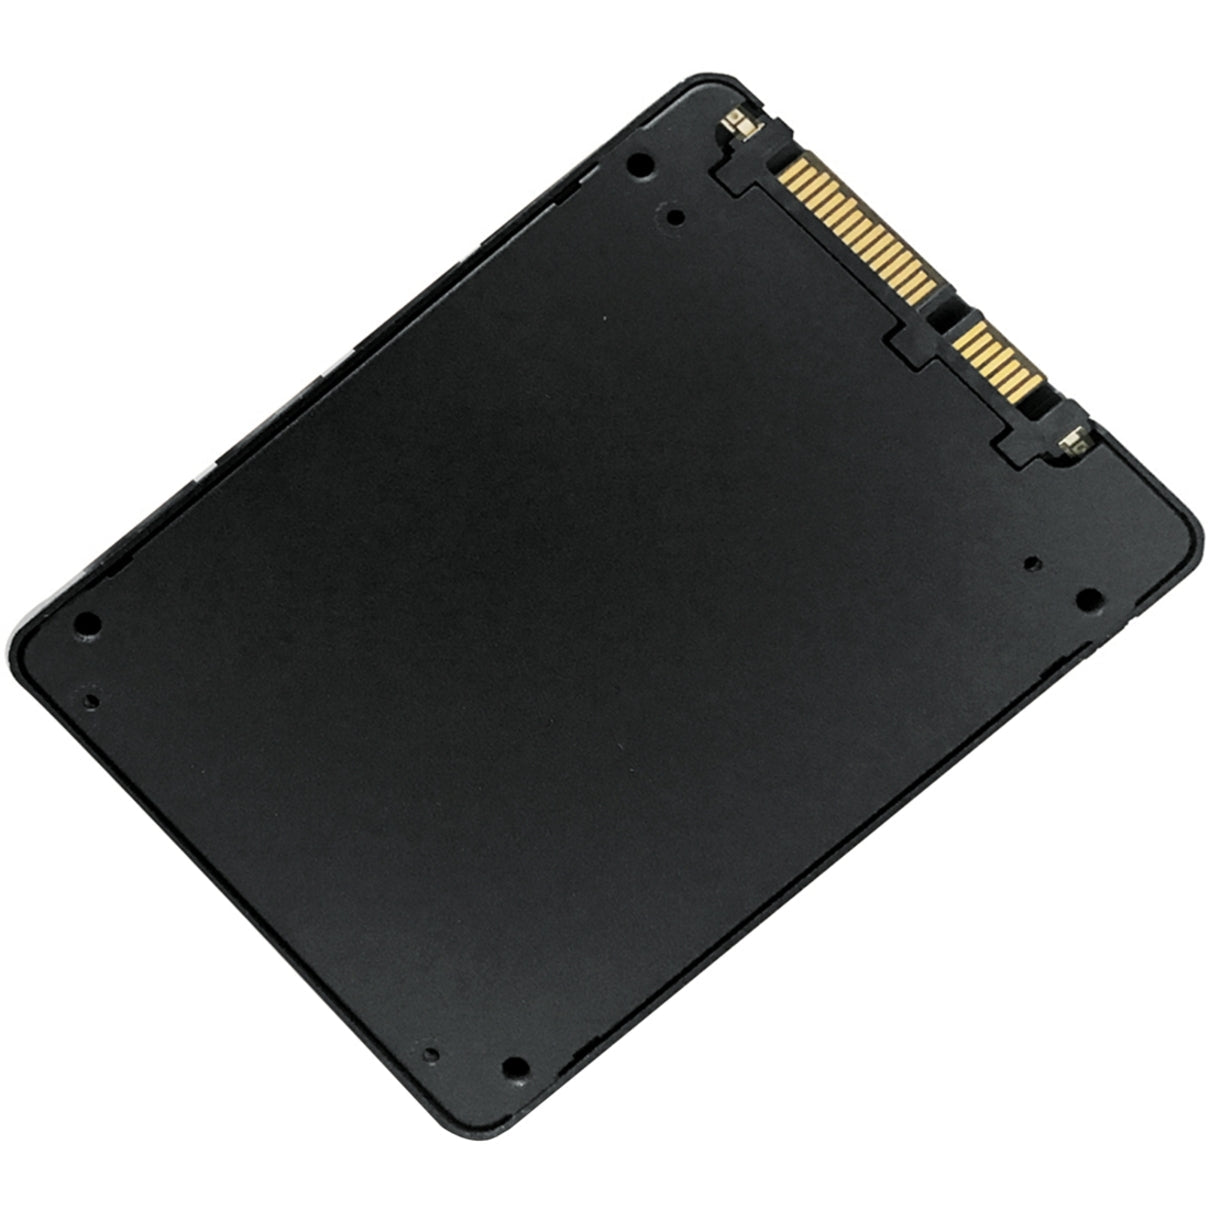 Hyundai 120GB SATA 3D TLC 2.5" Internal PC SSD Advanced 3D NAND Flash Up to 550/420 MB/s